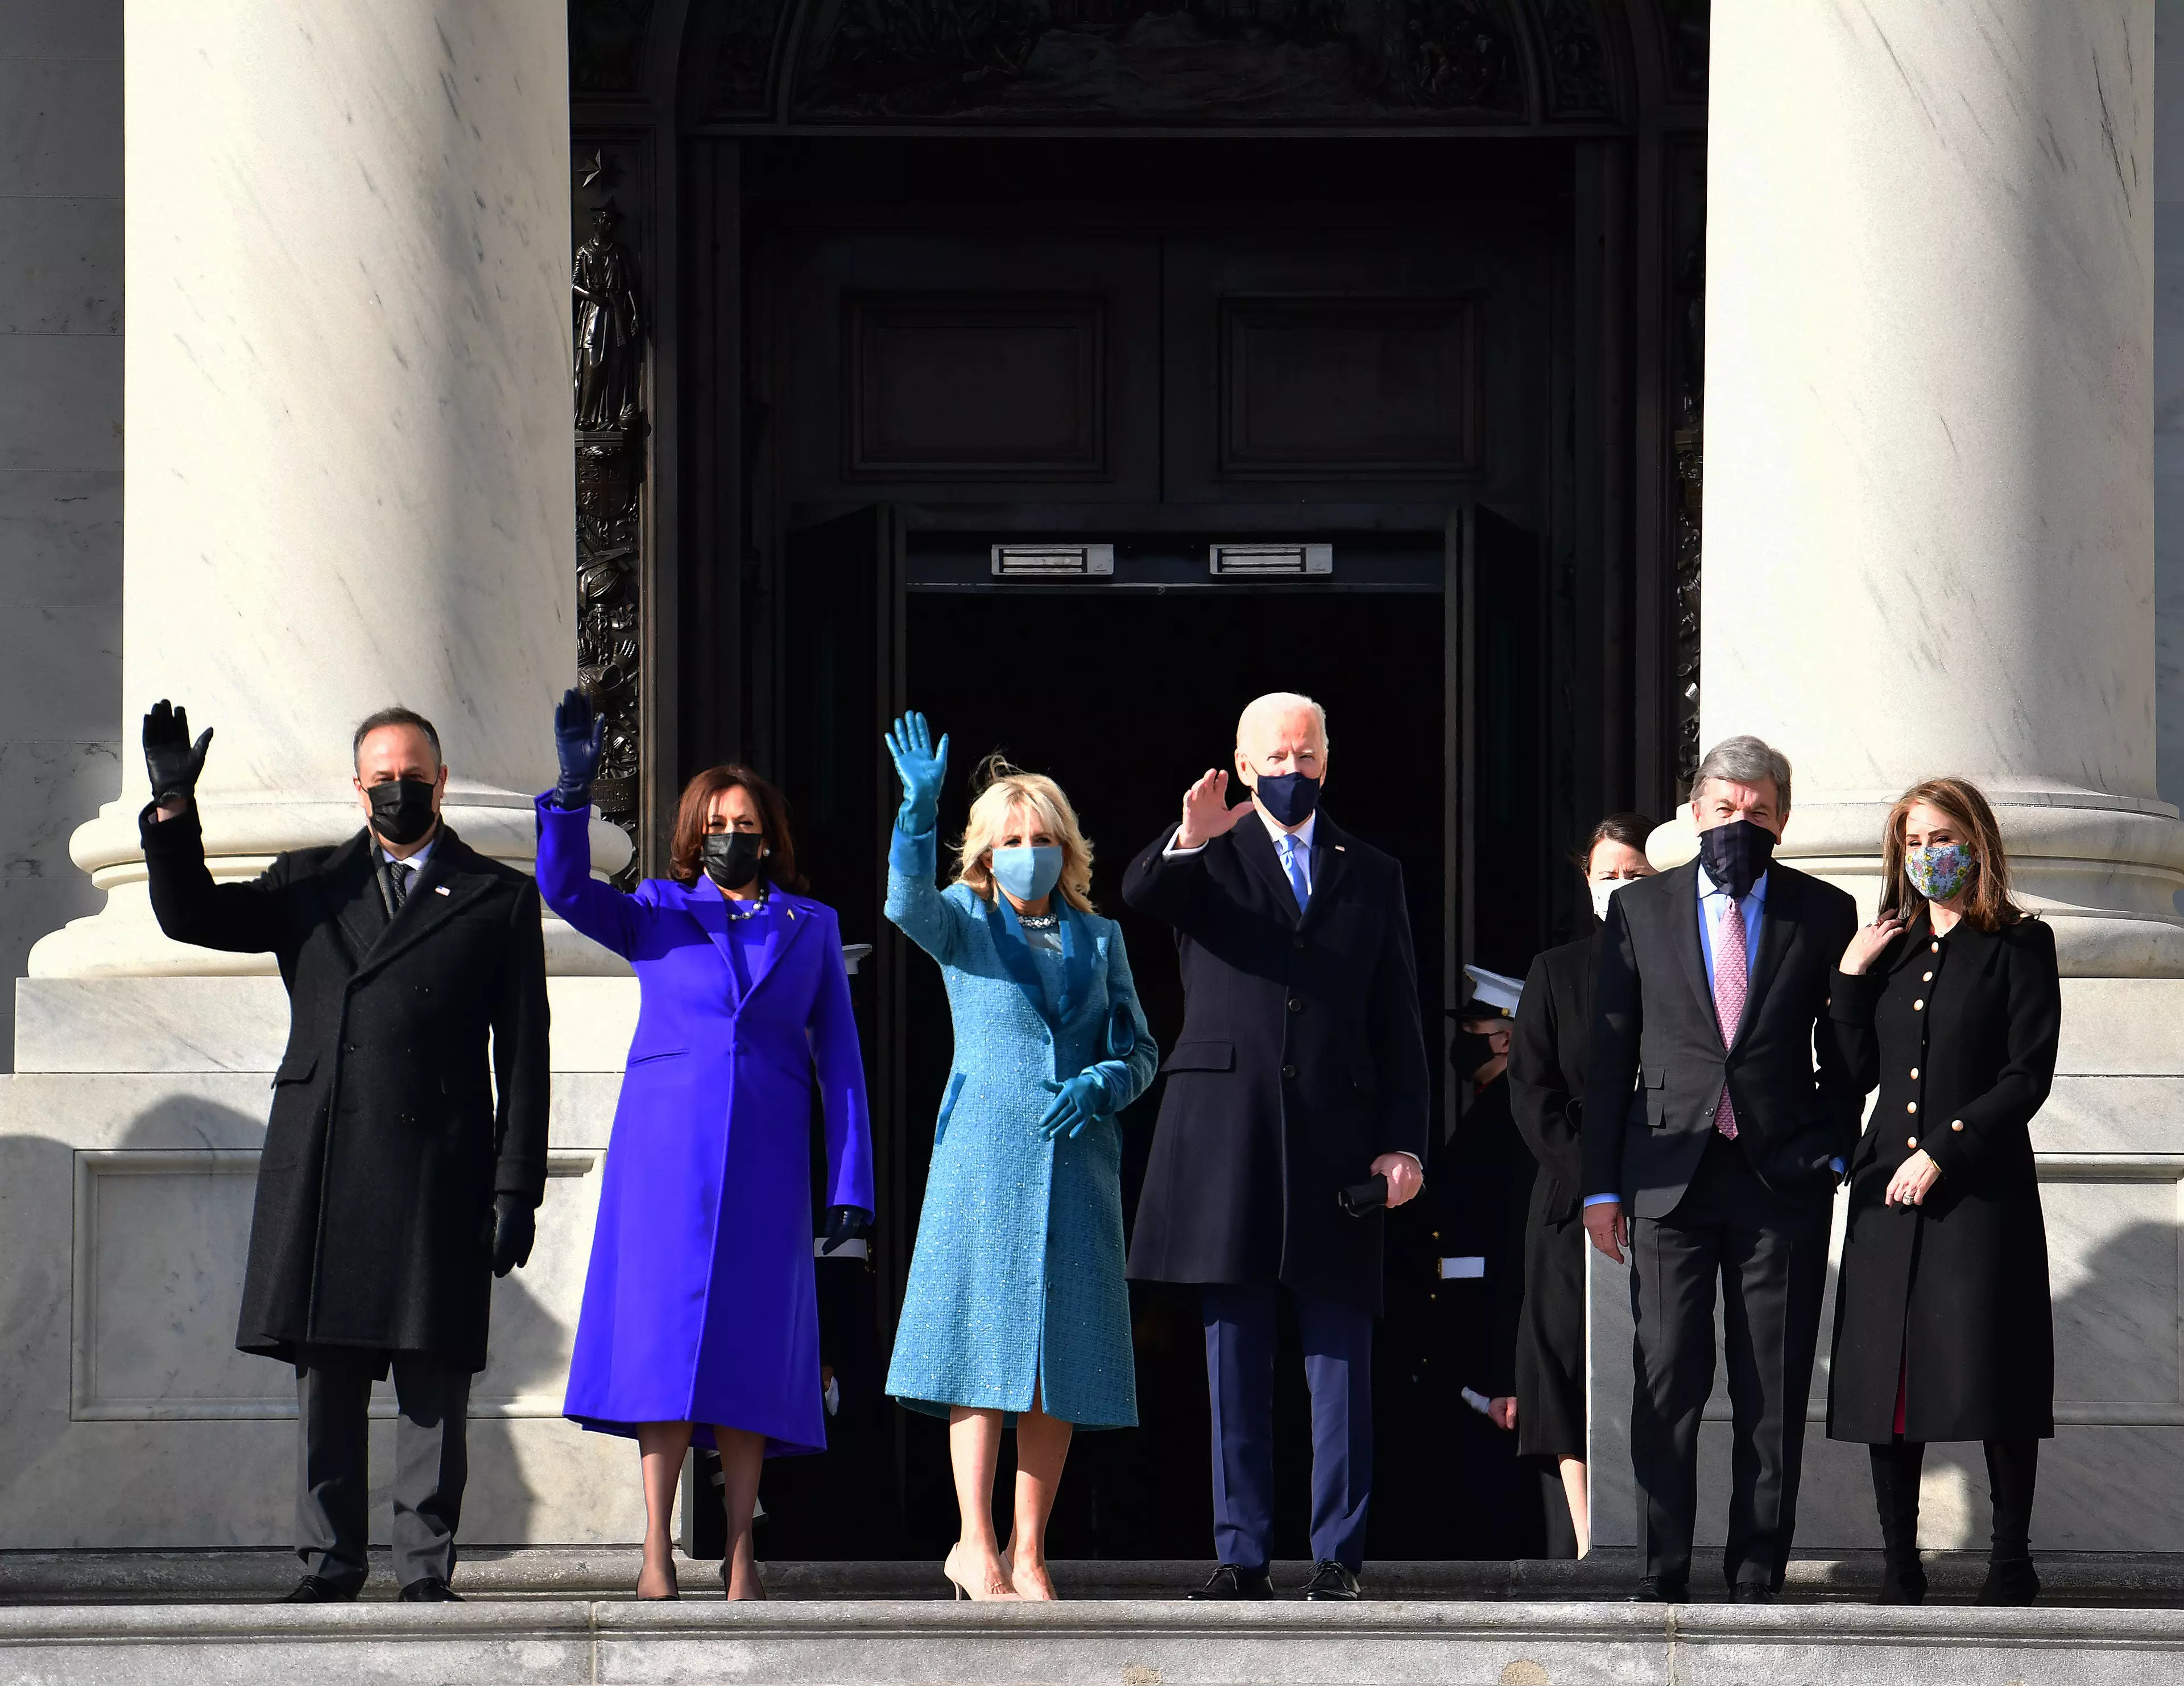 President Joe Biden and Vice President Kamala Harris were sworn in today.